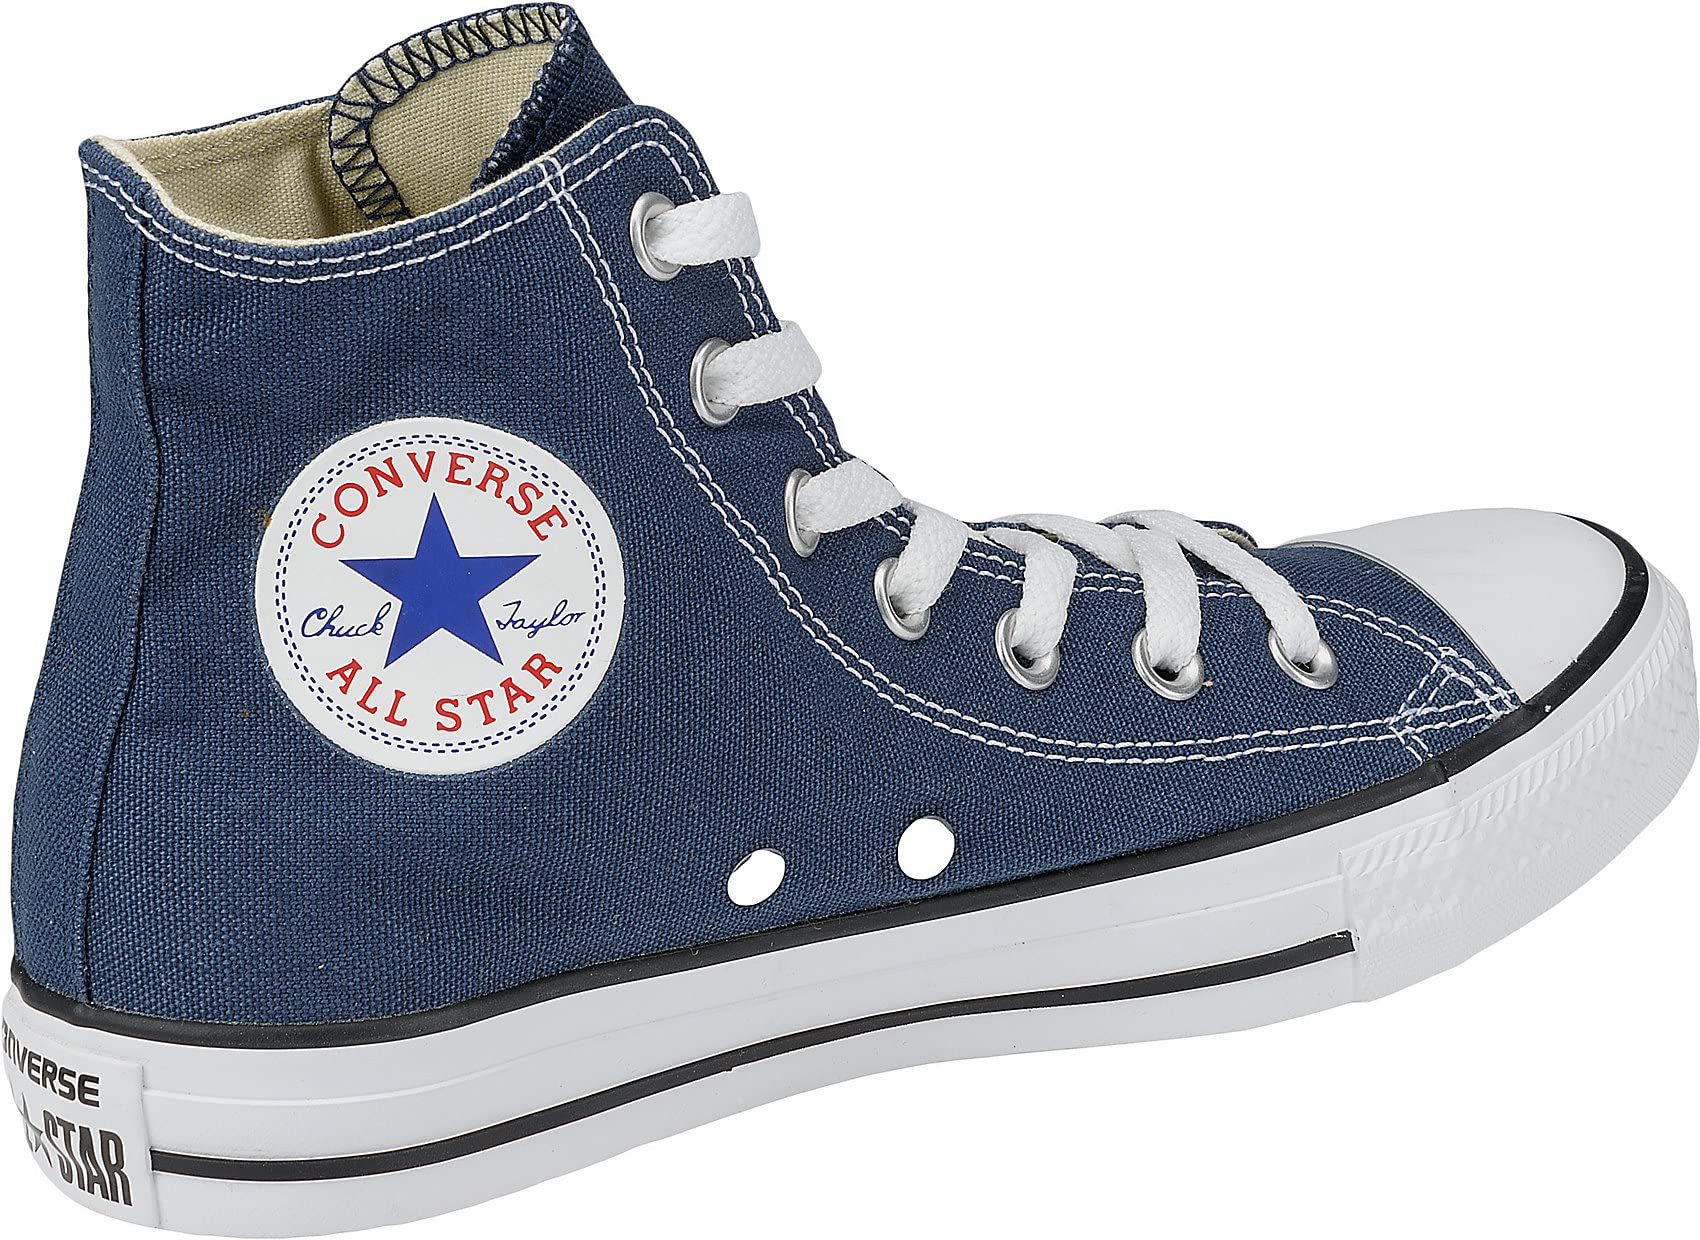 Converse Unisex-Adult M9622C All Star HI Navy NVY Sneaker - 3.5 UK (M9622C) 